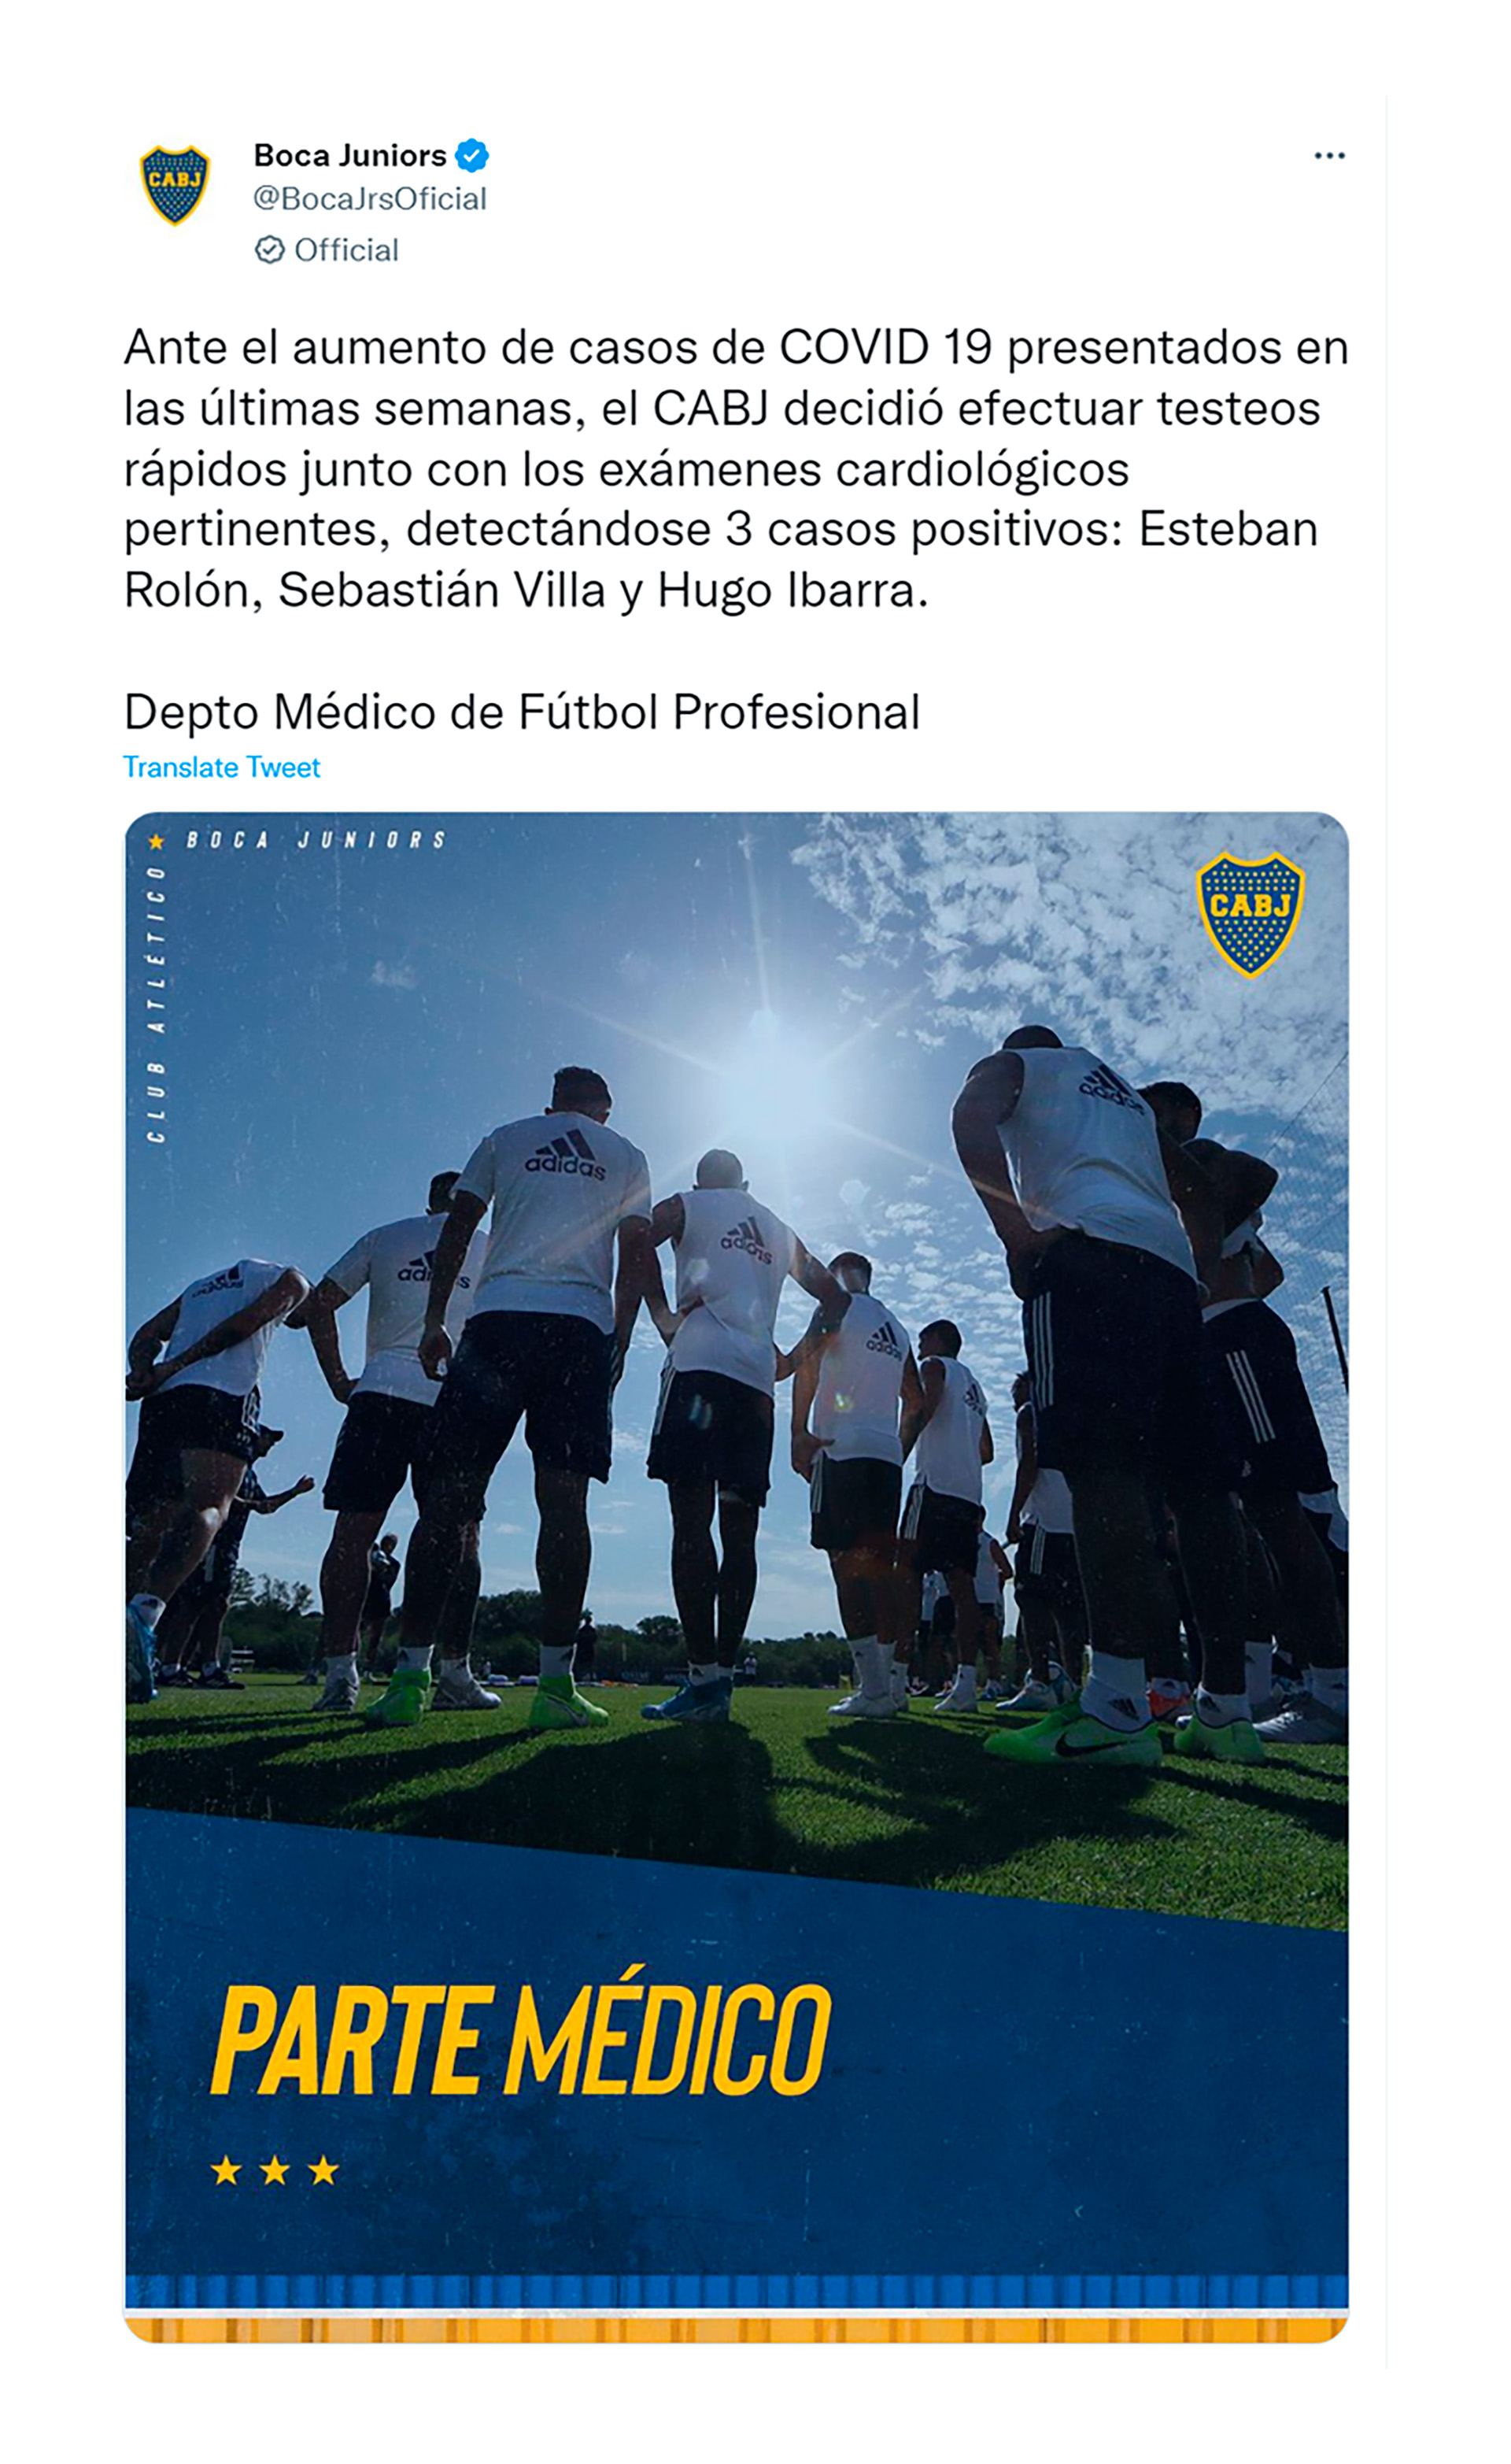 El comunicado de Boca Juniors